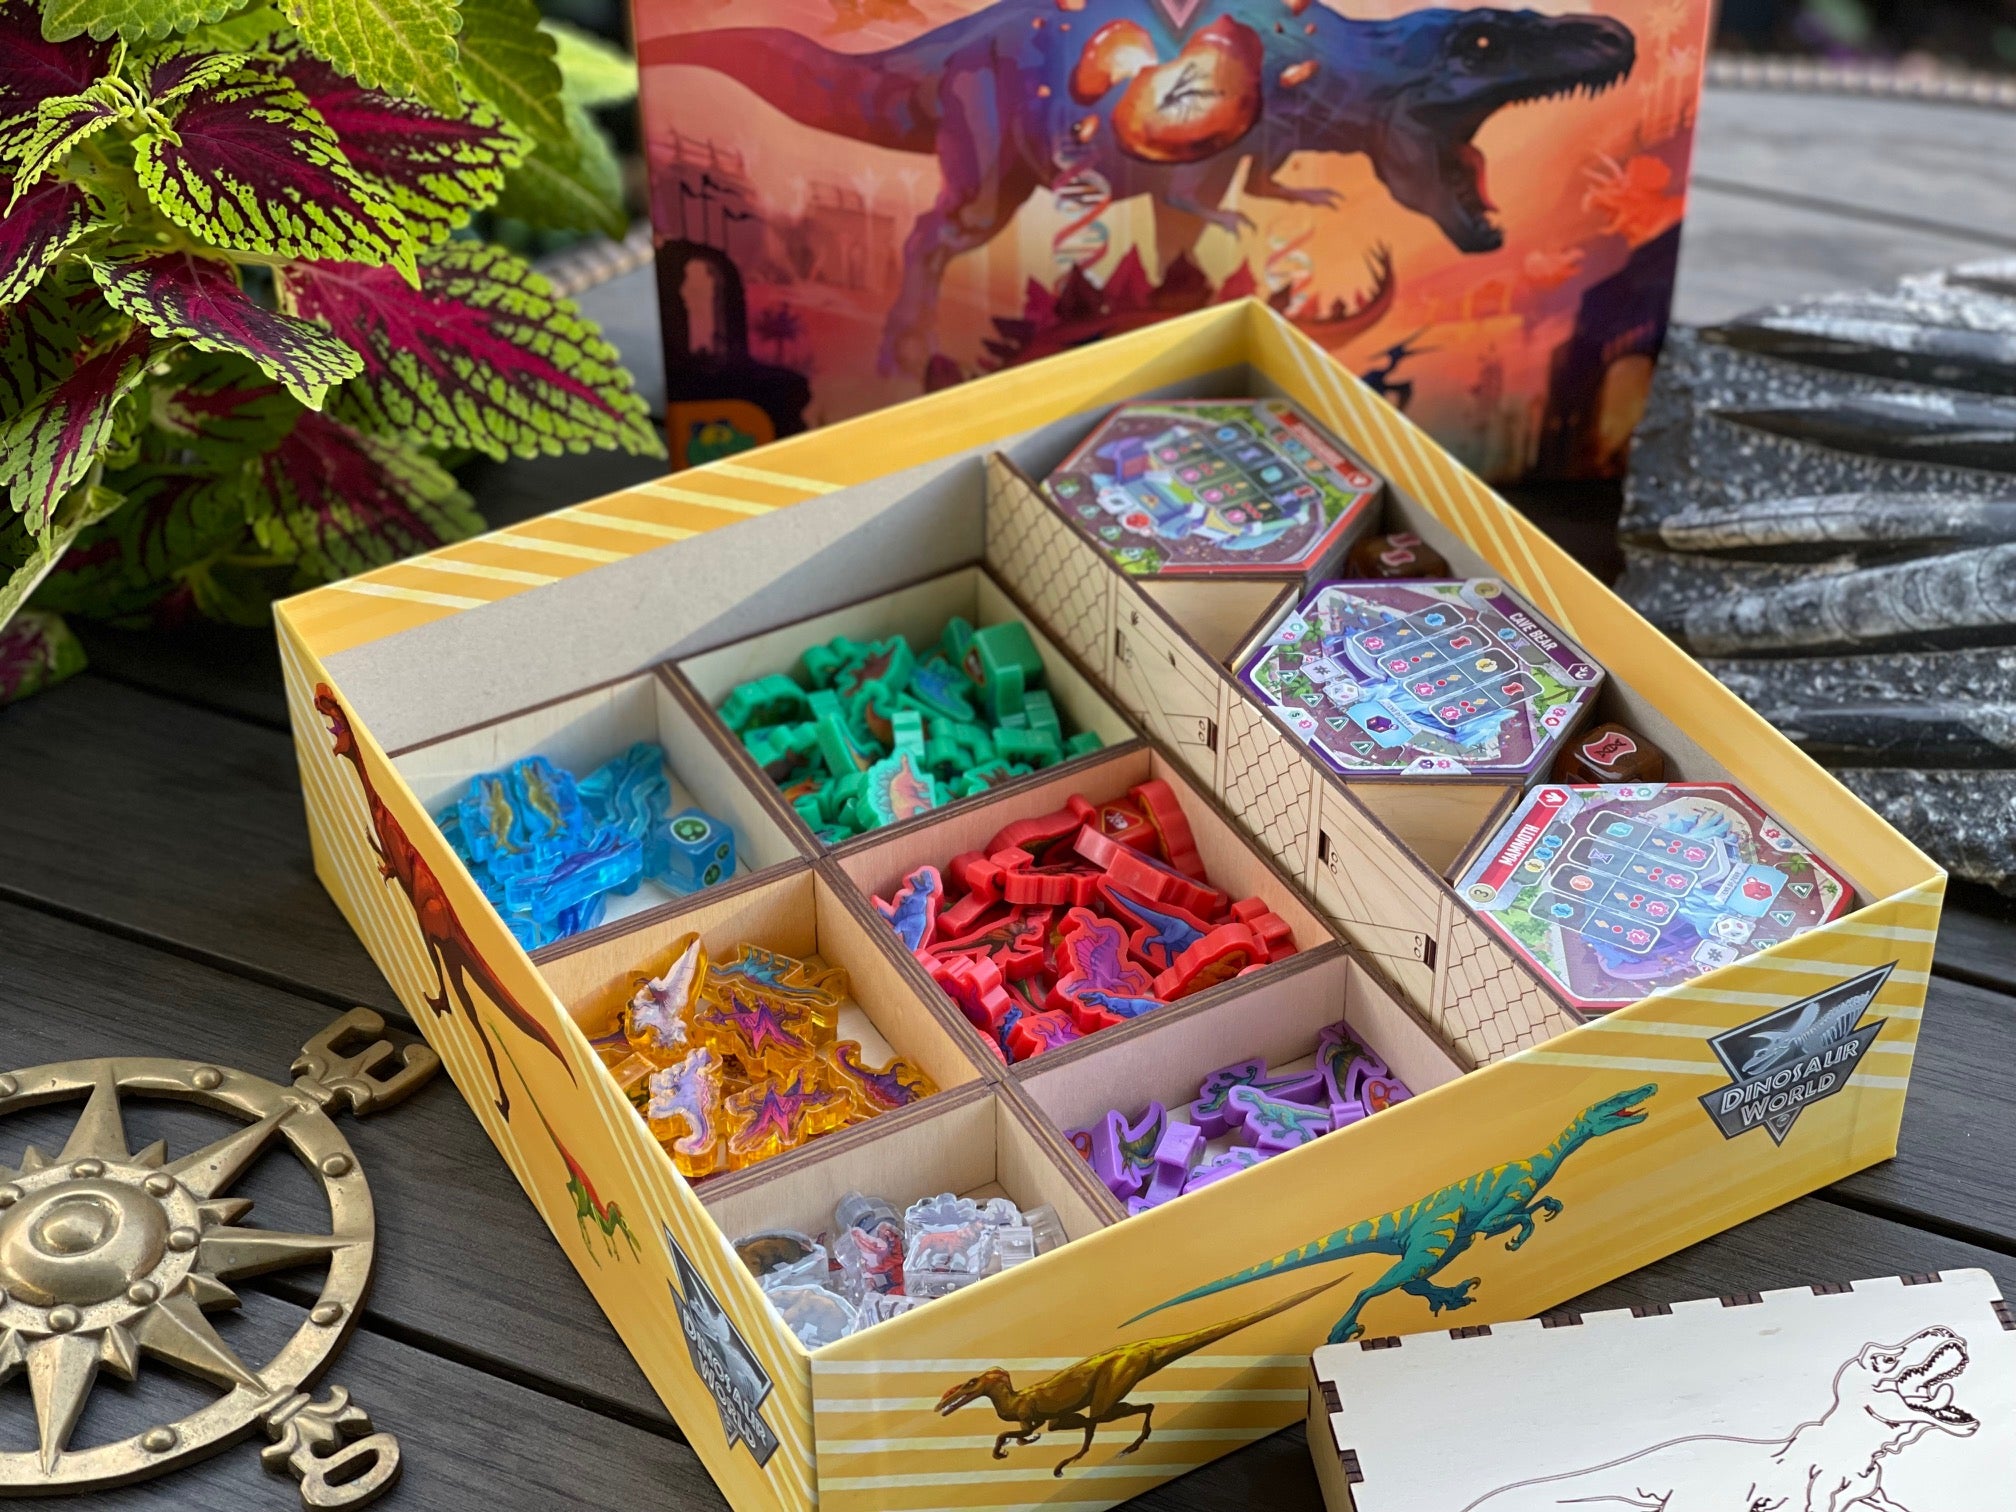 Draftosaurus Game Box Organizer 